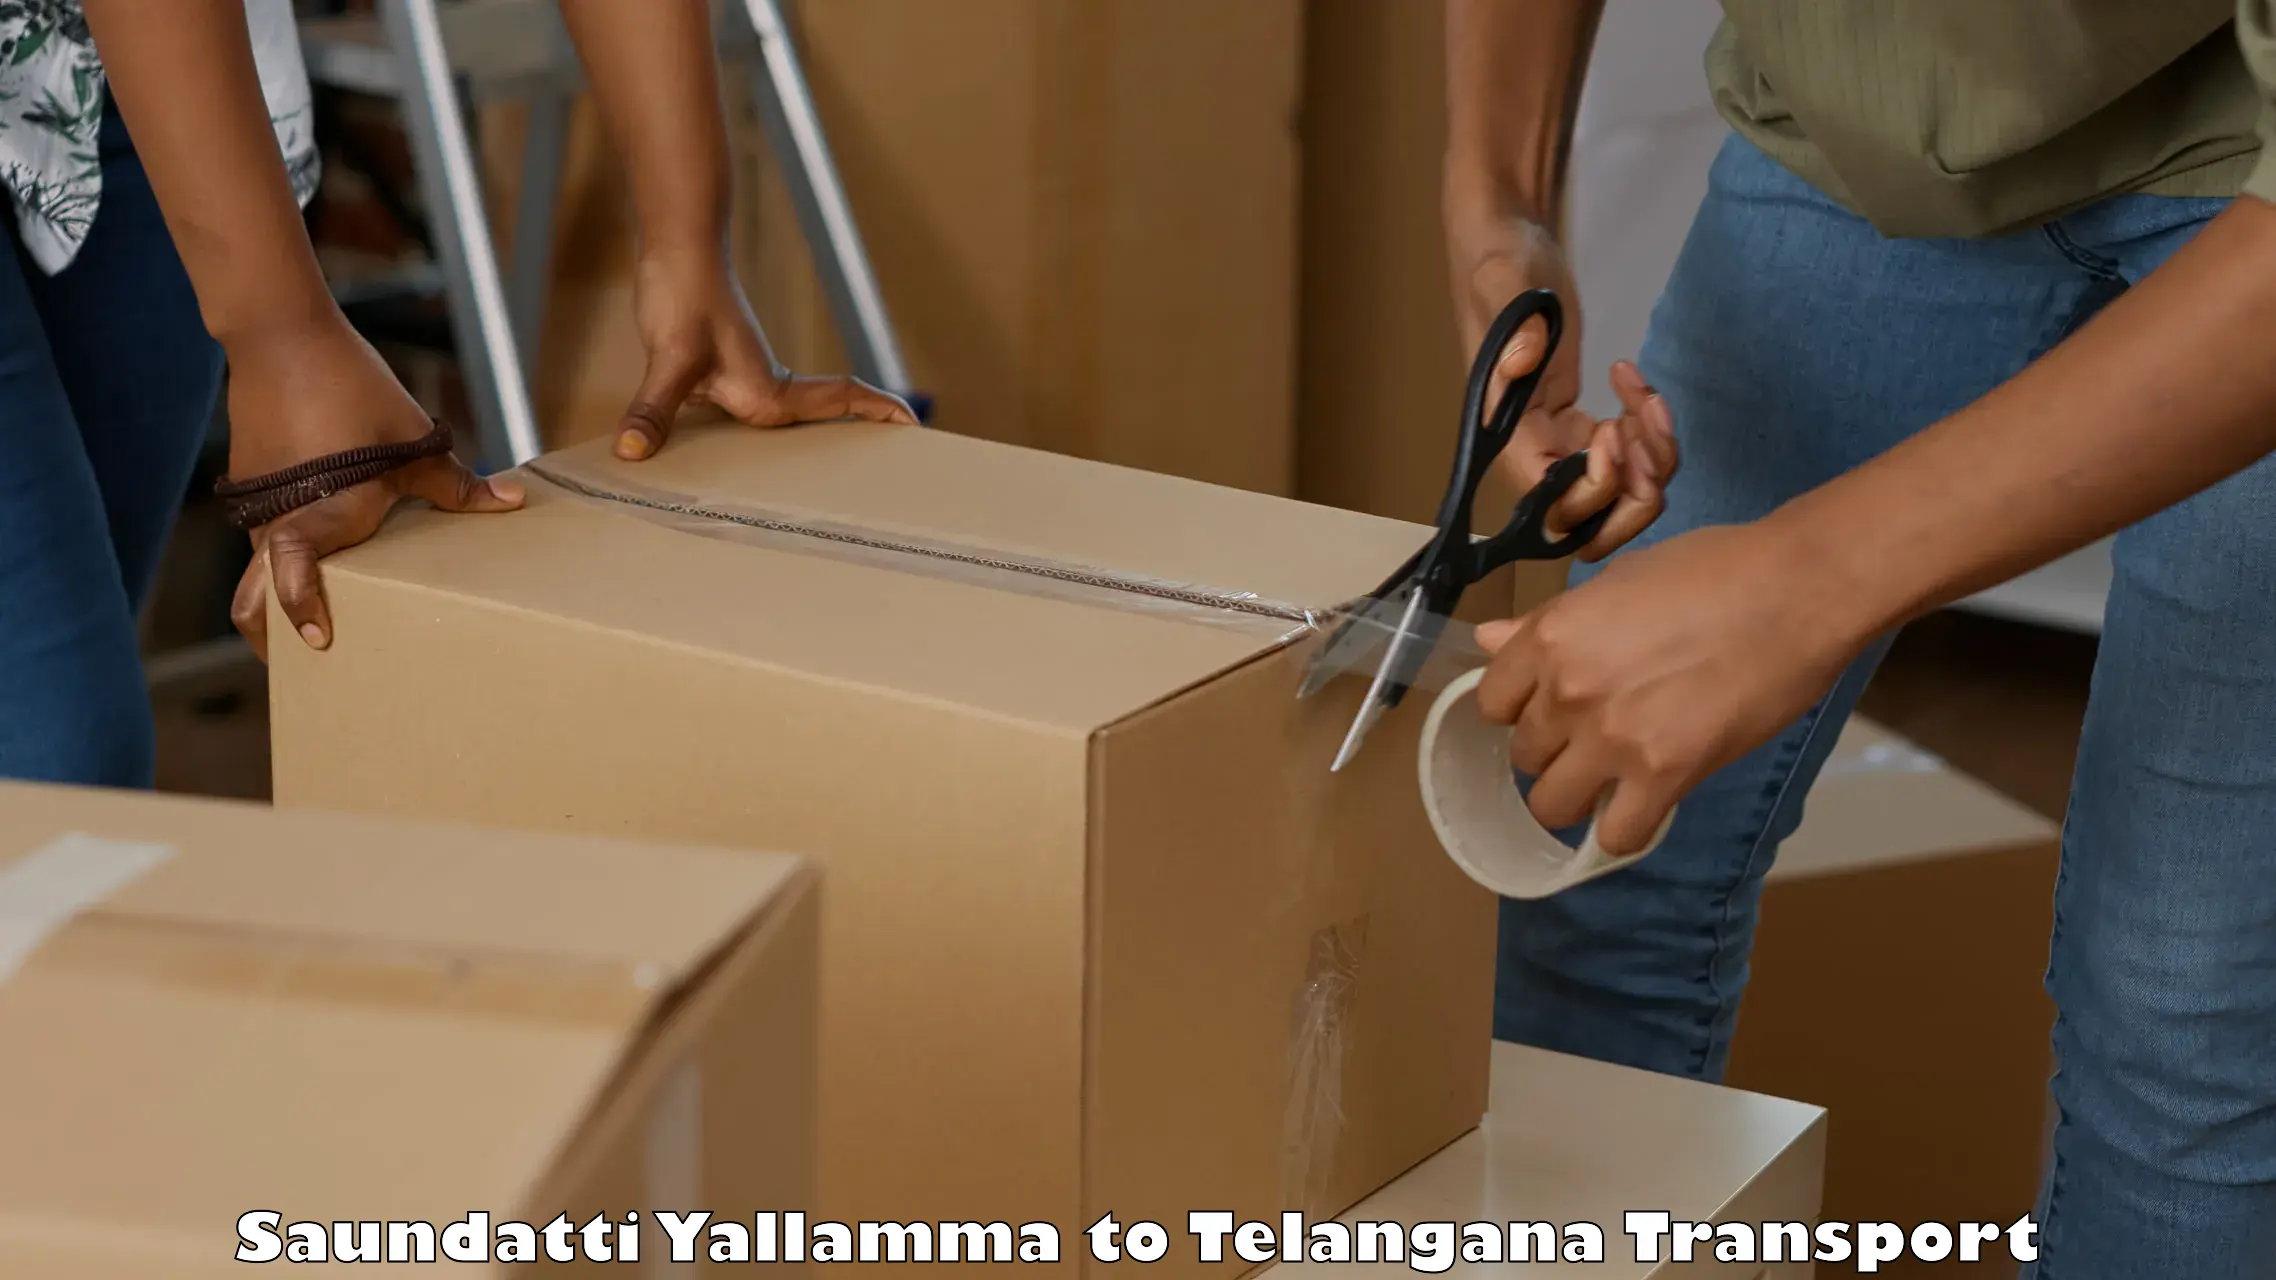 Transport shared services in Saundatti Yallamma to Jogipet